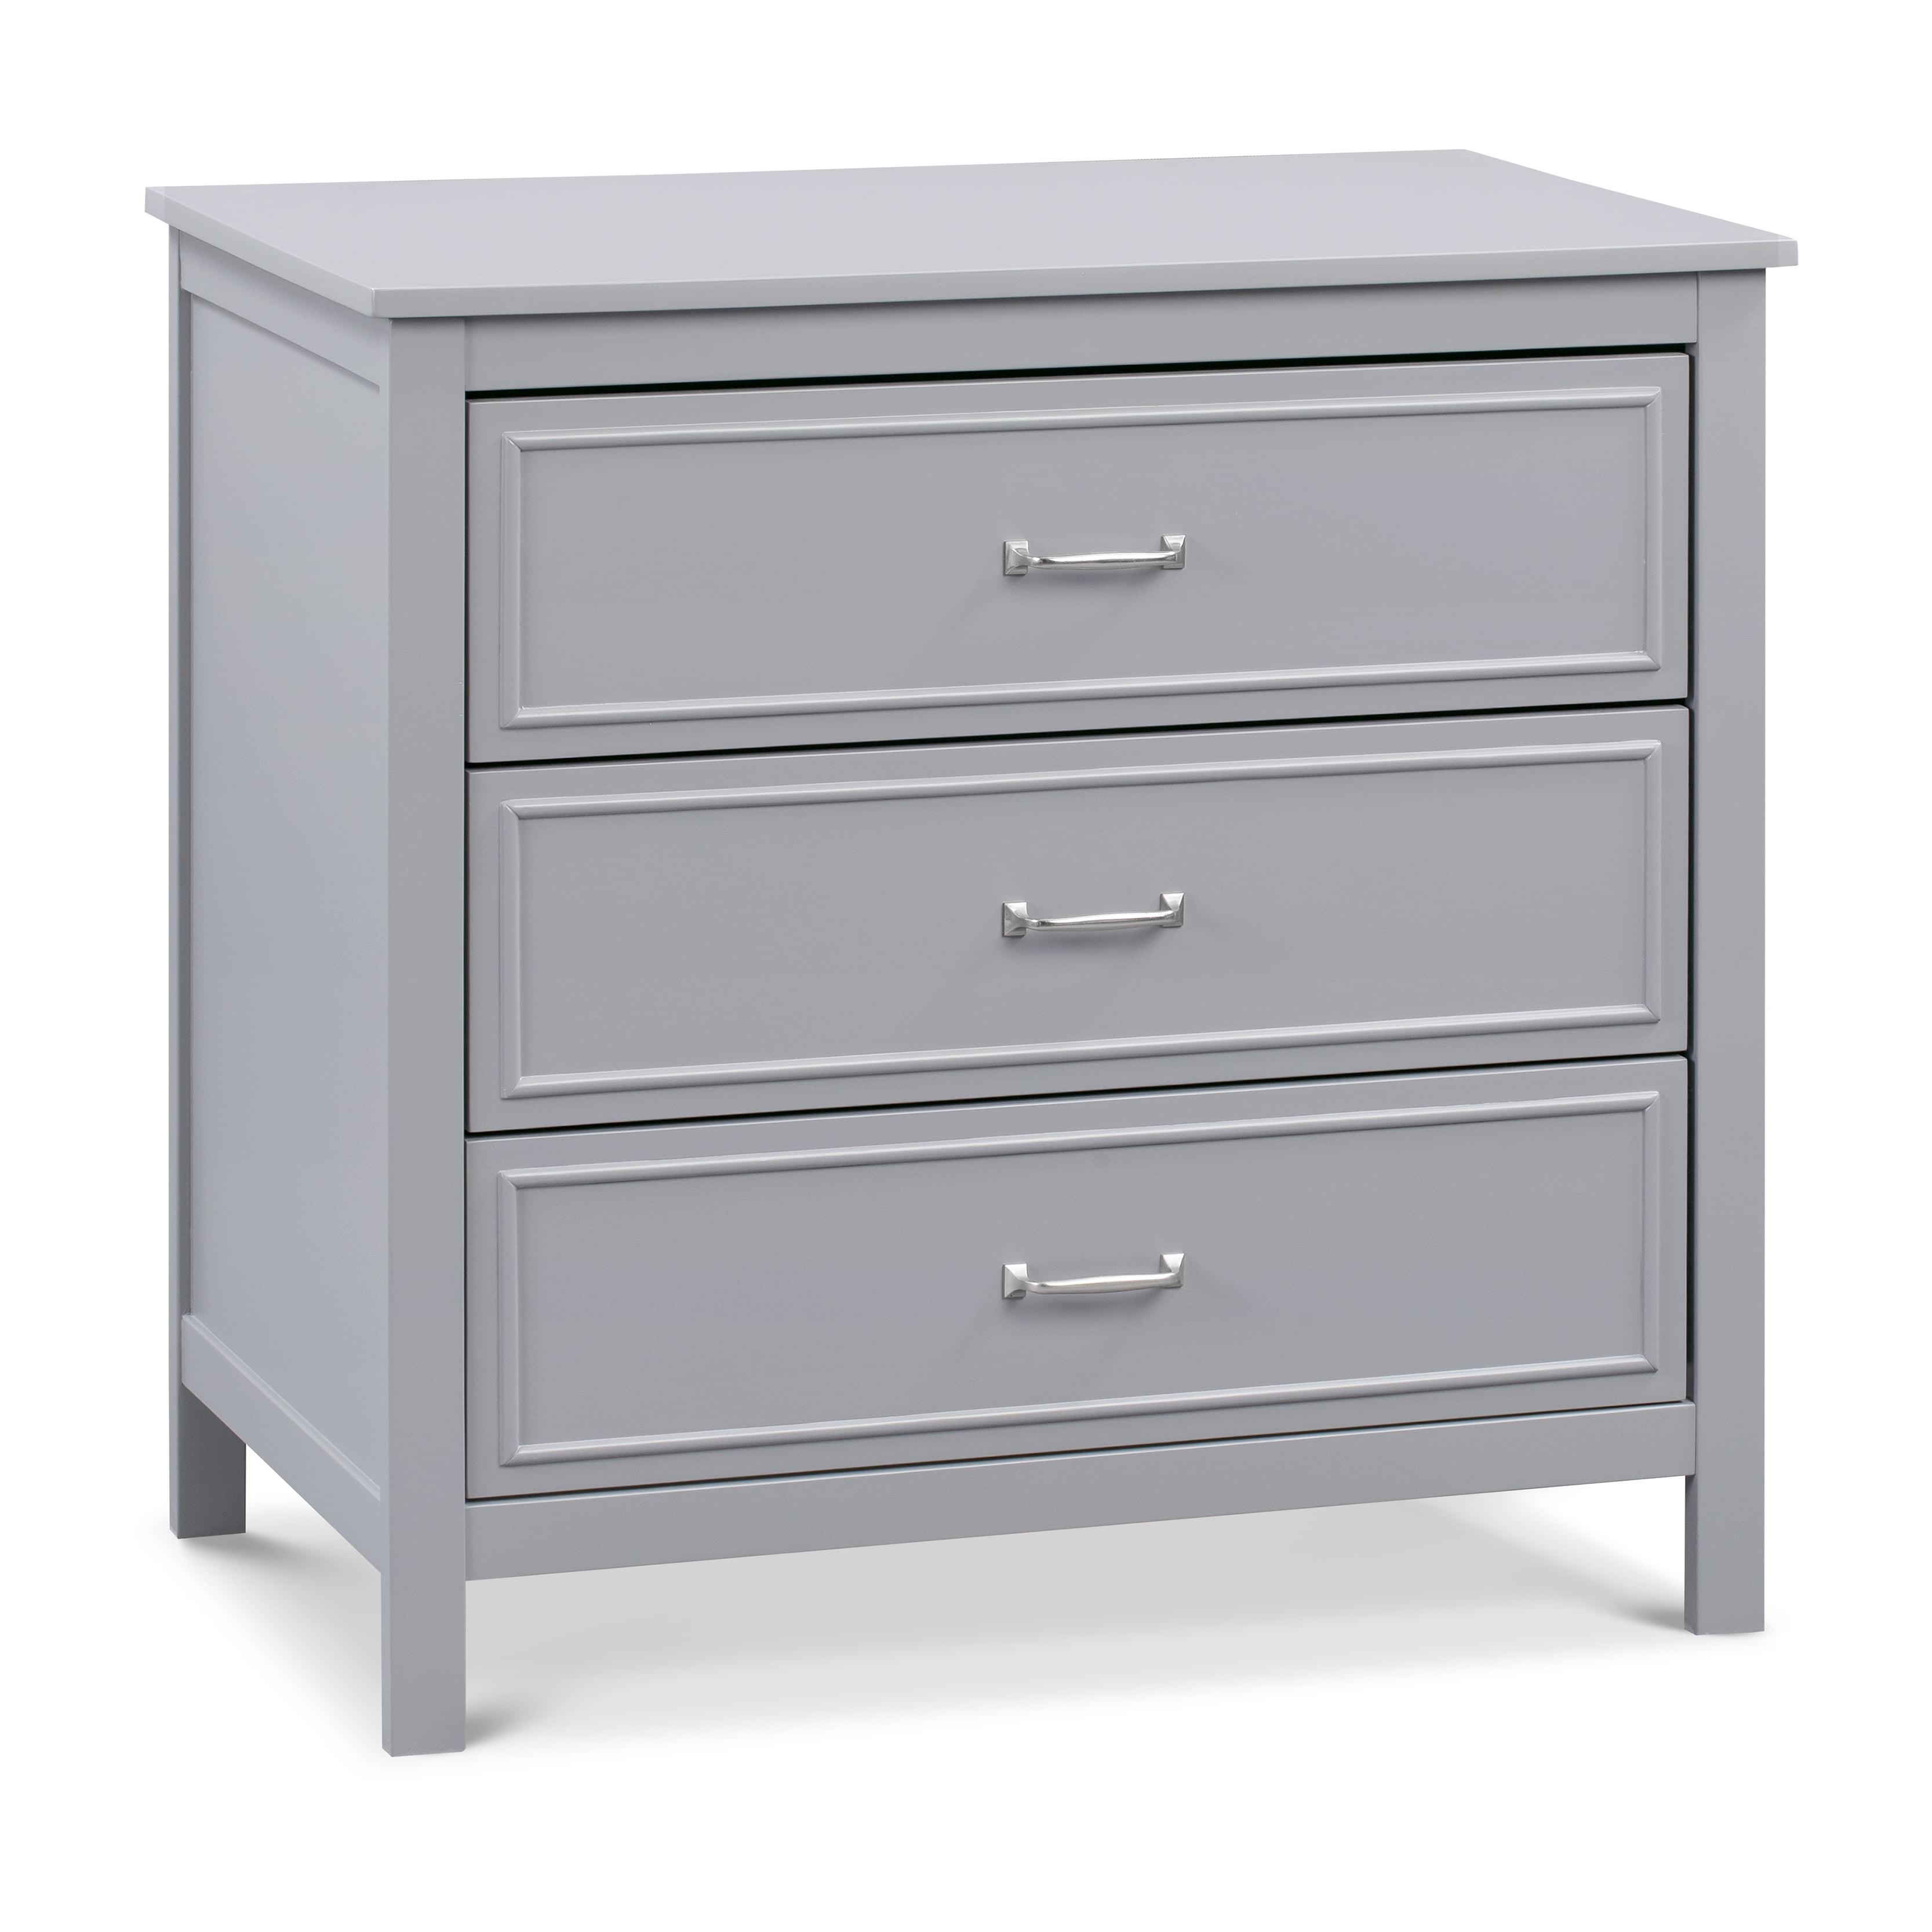 Charlie Classic 3-Drawer Nursery Dresser in Sleek Gray